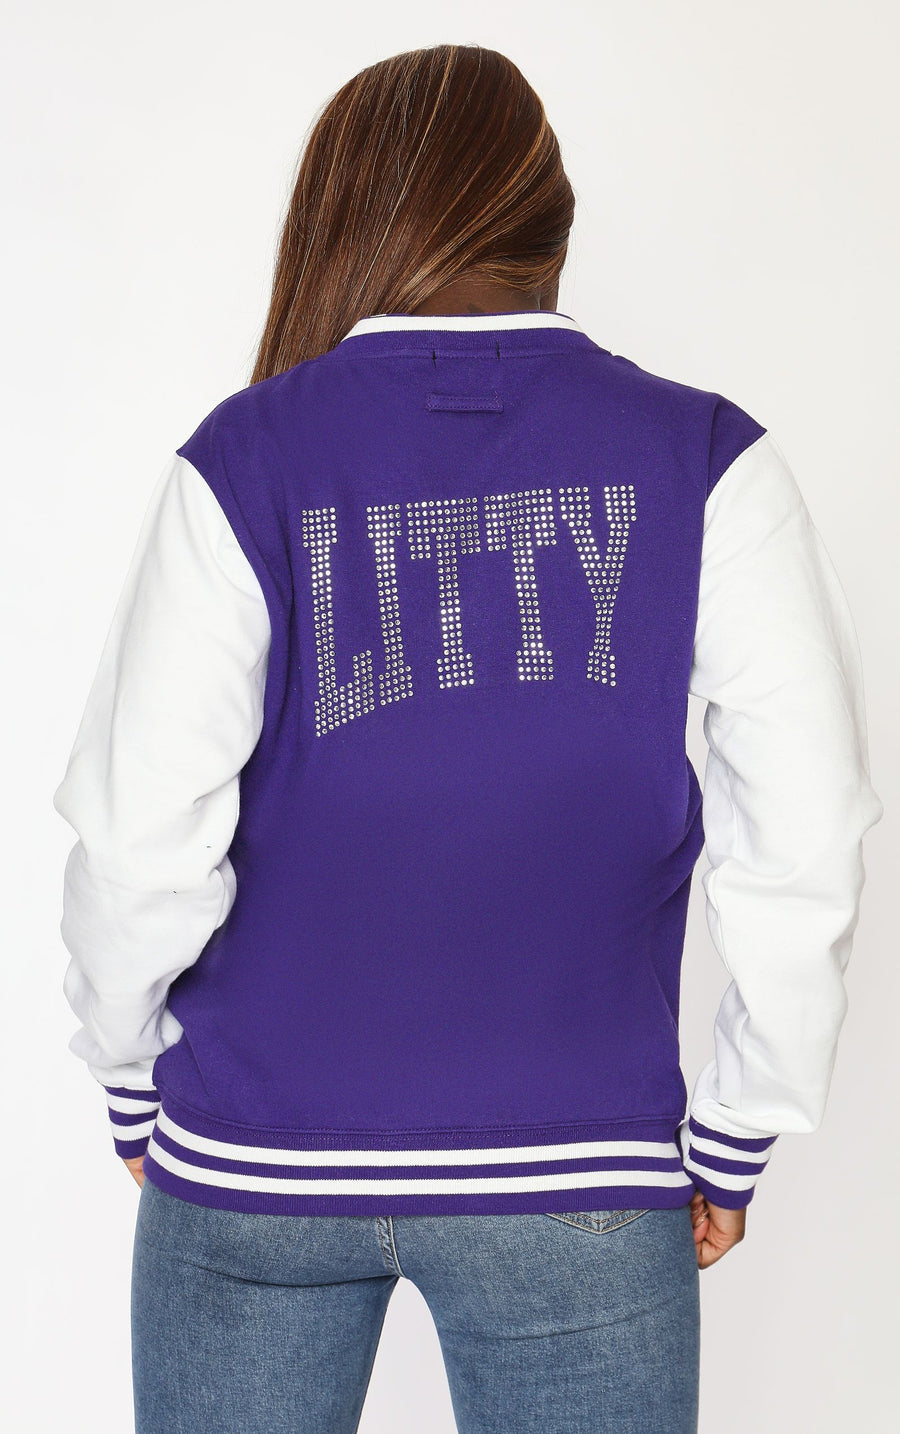 Letterman Jacket Diamante Stones Litty Purple/White Jacket